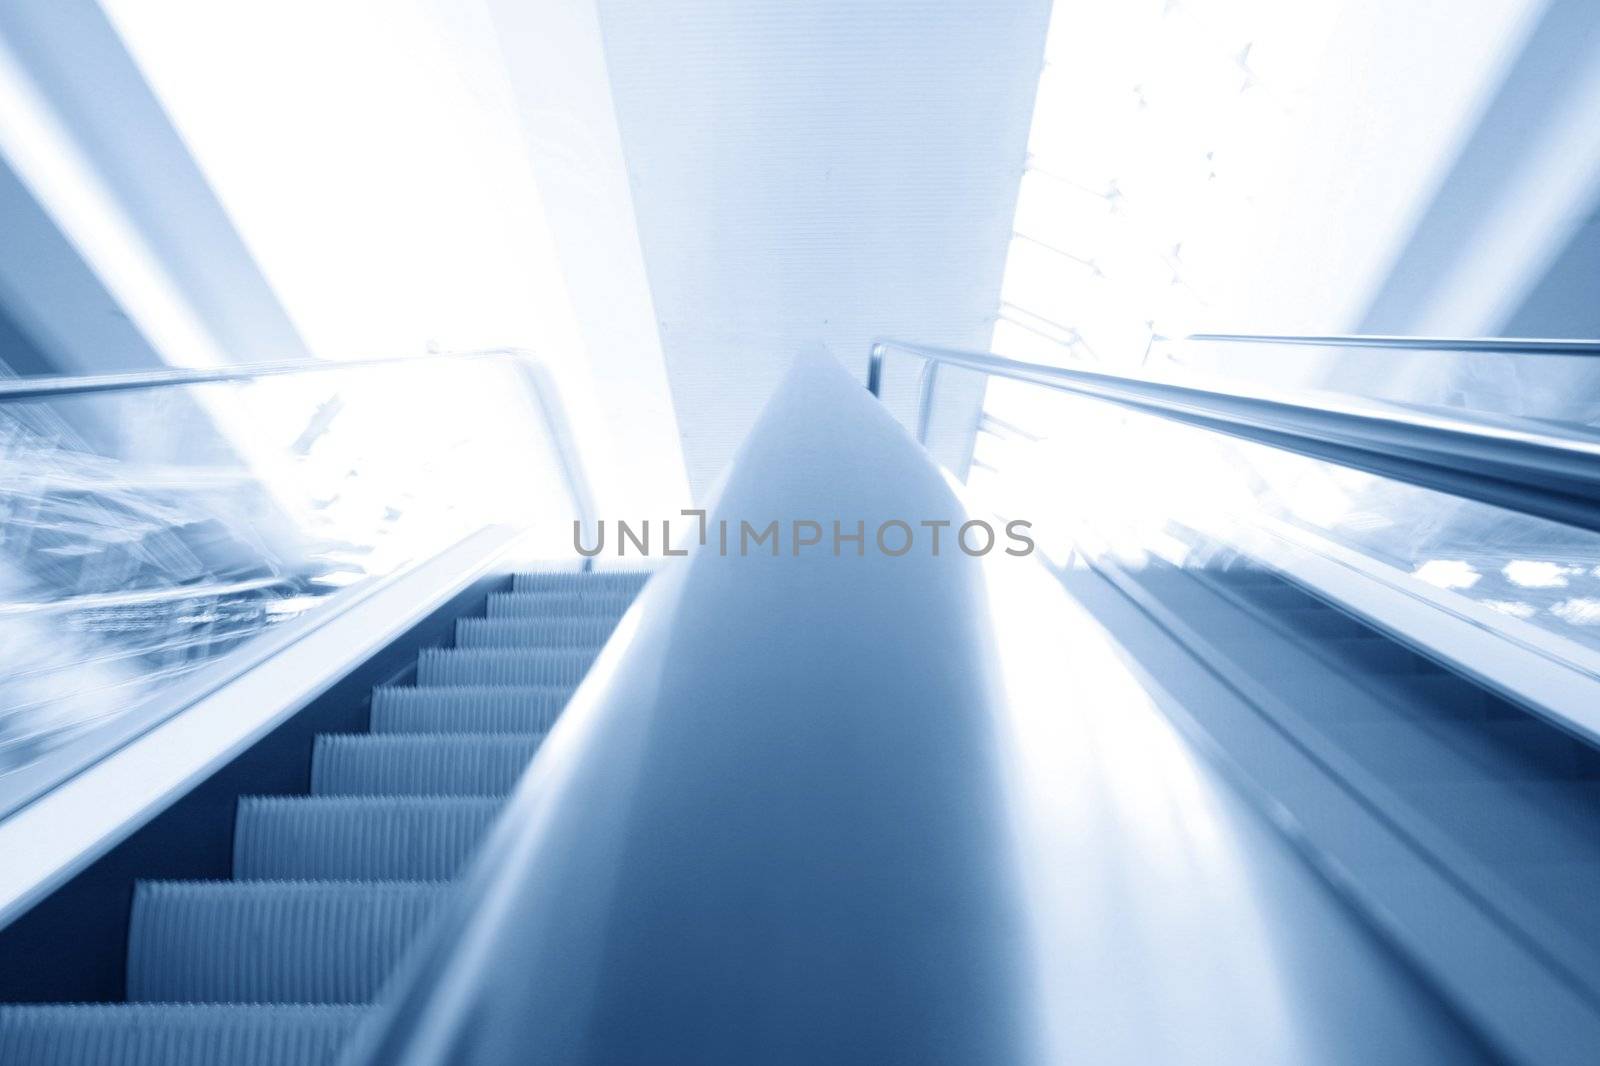 blurred escalator background by Yellowj